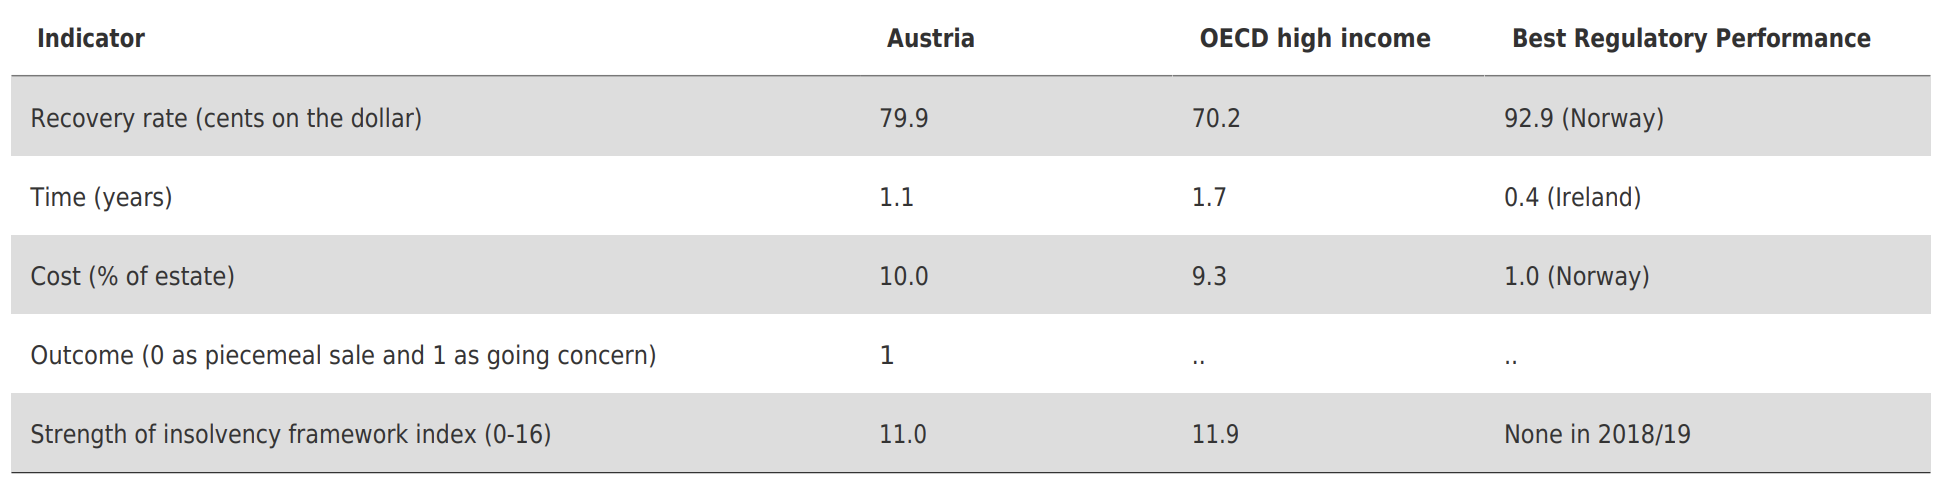 Resolving Insolvency - Austria